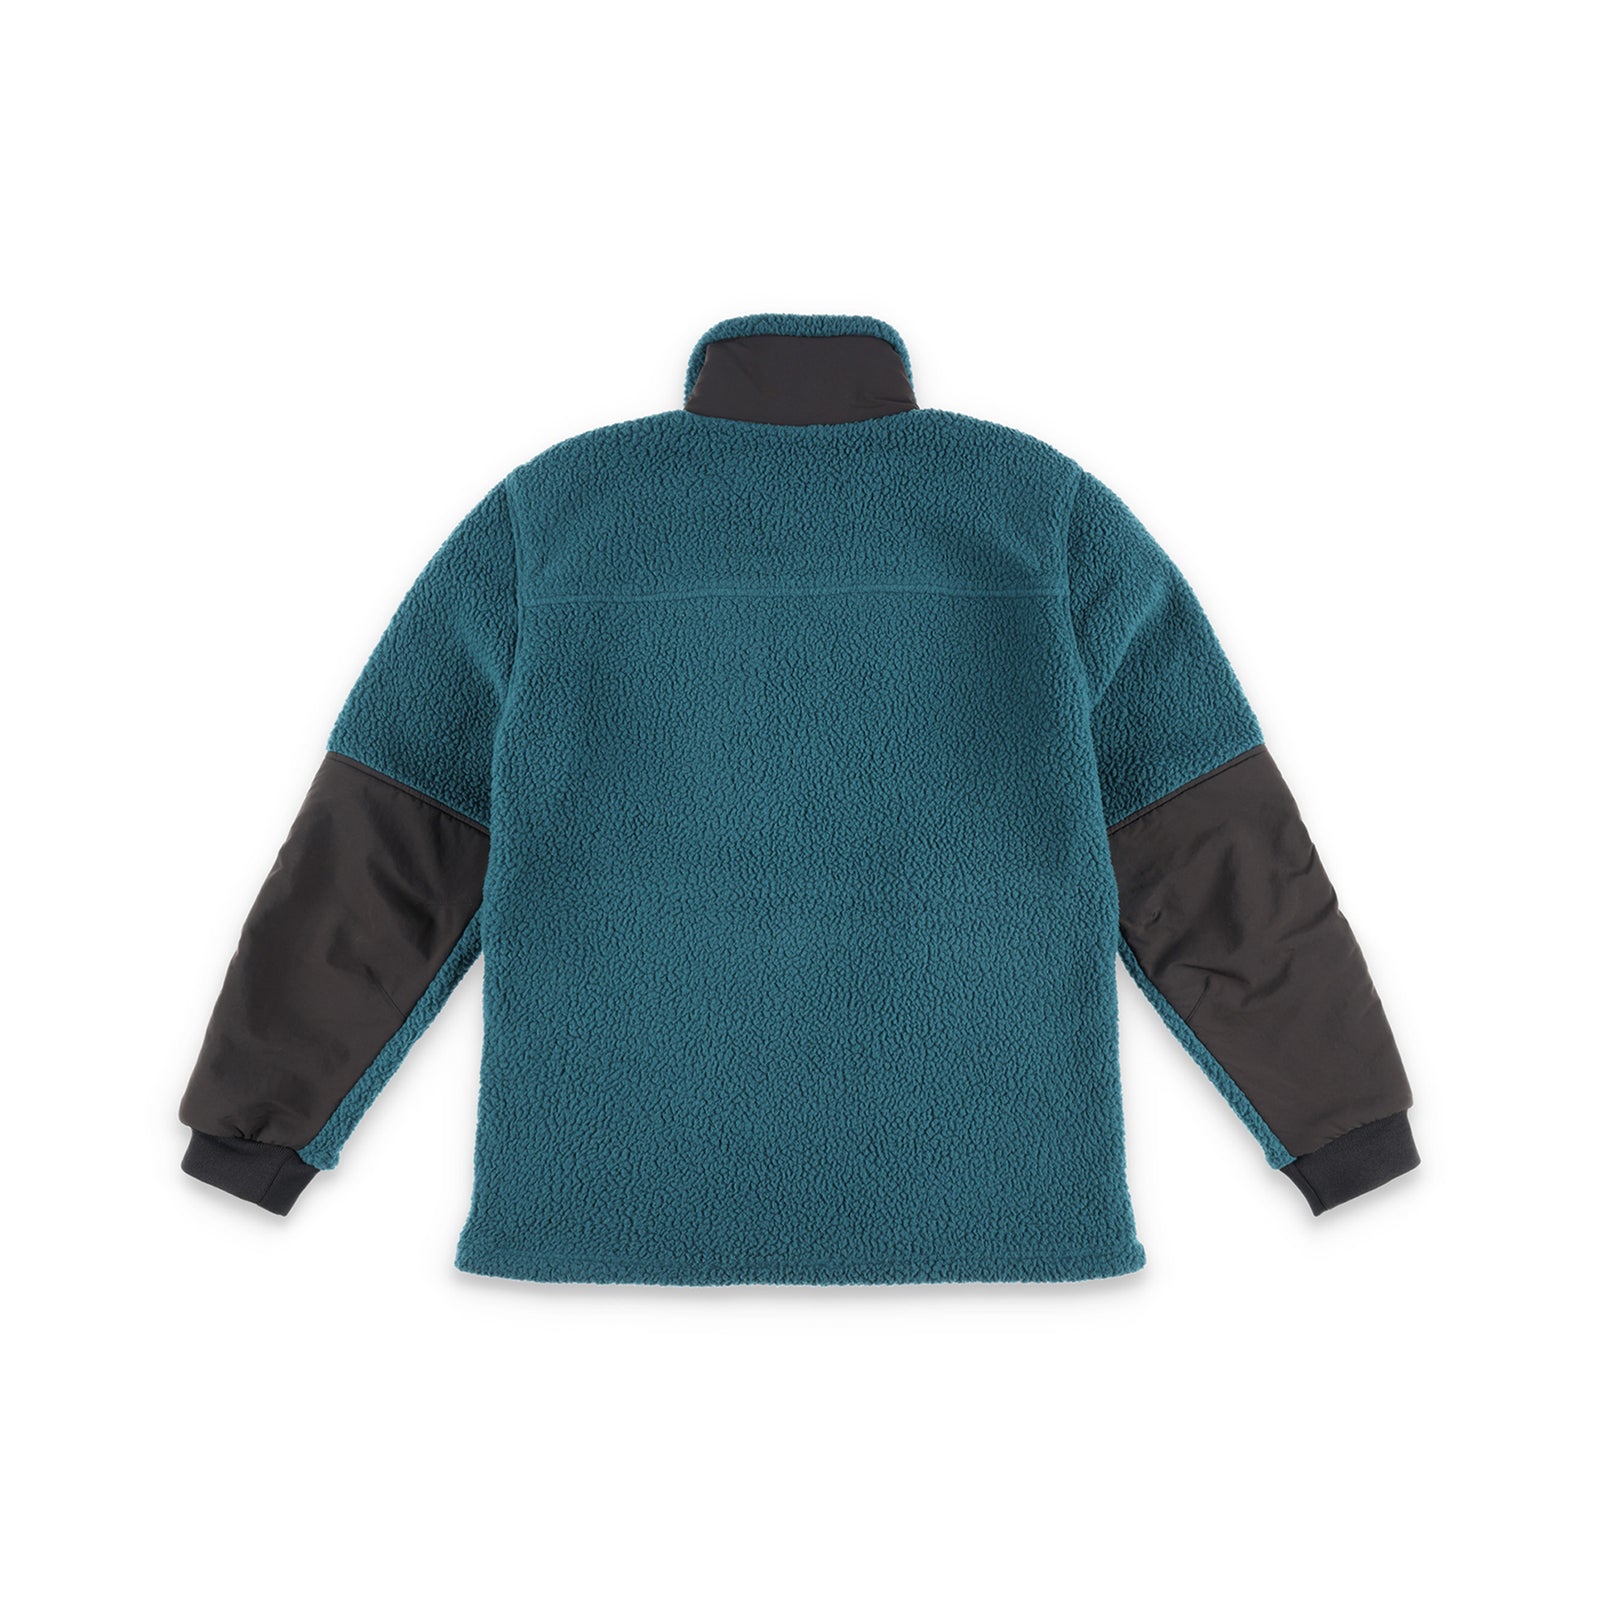 Back of Topo Designs Men's Mountain Fleece Pullover in "Pond Blue".